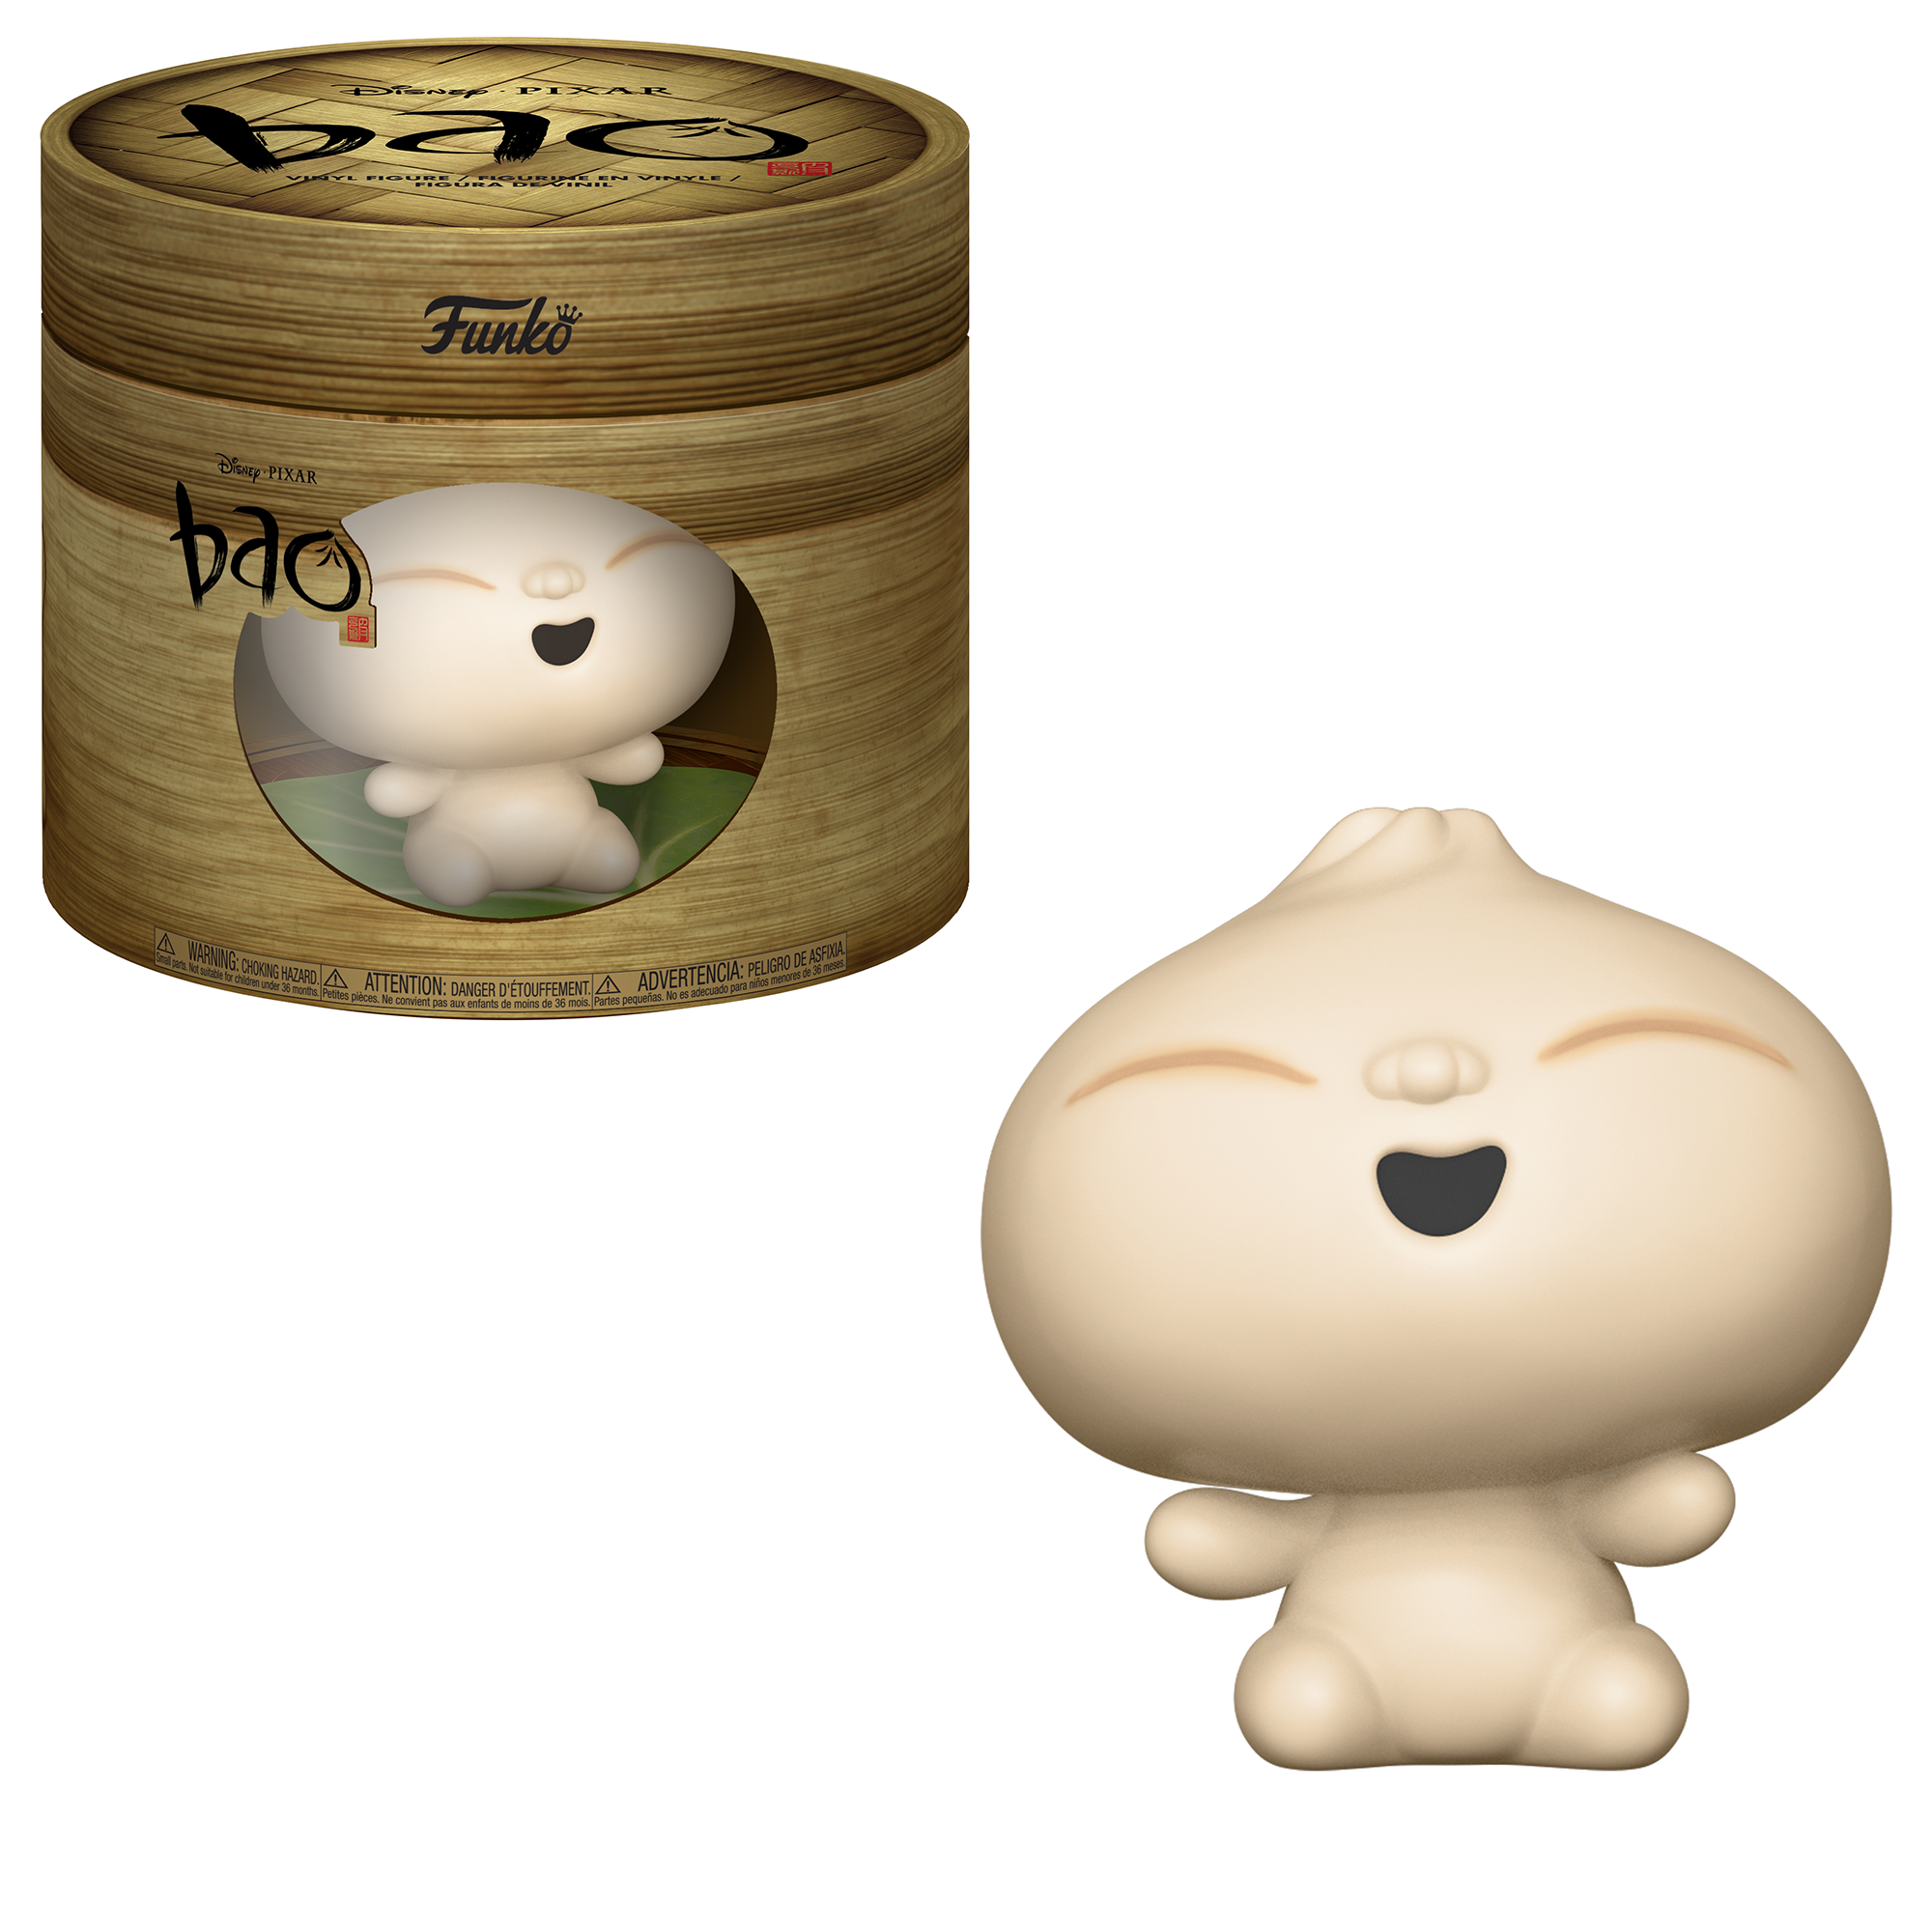 Funko Disney Pixar Bao Collectible in Steam Basket Packaging